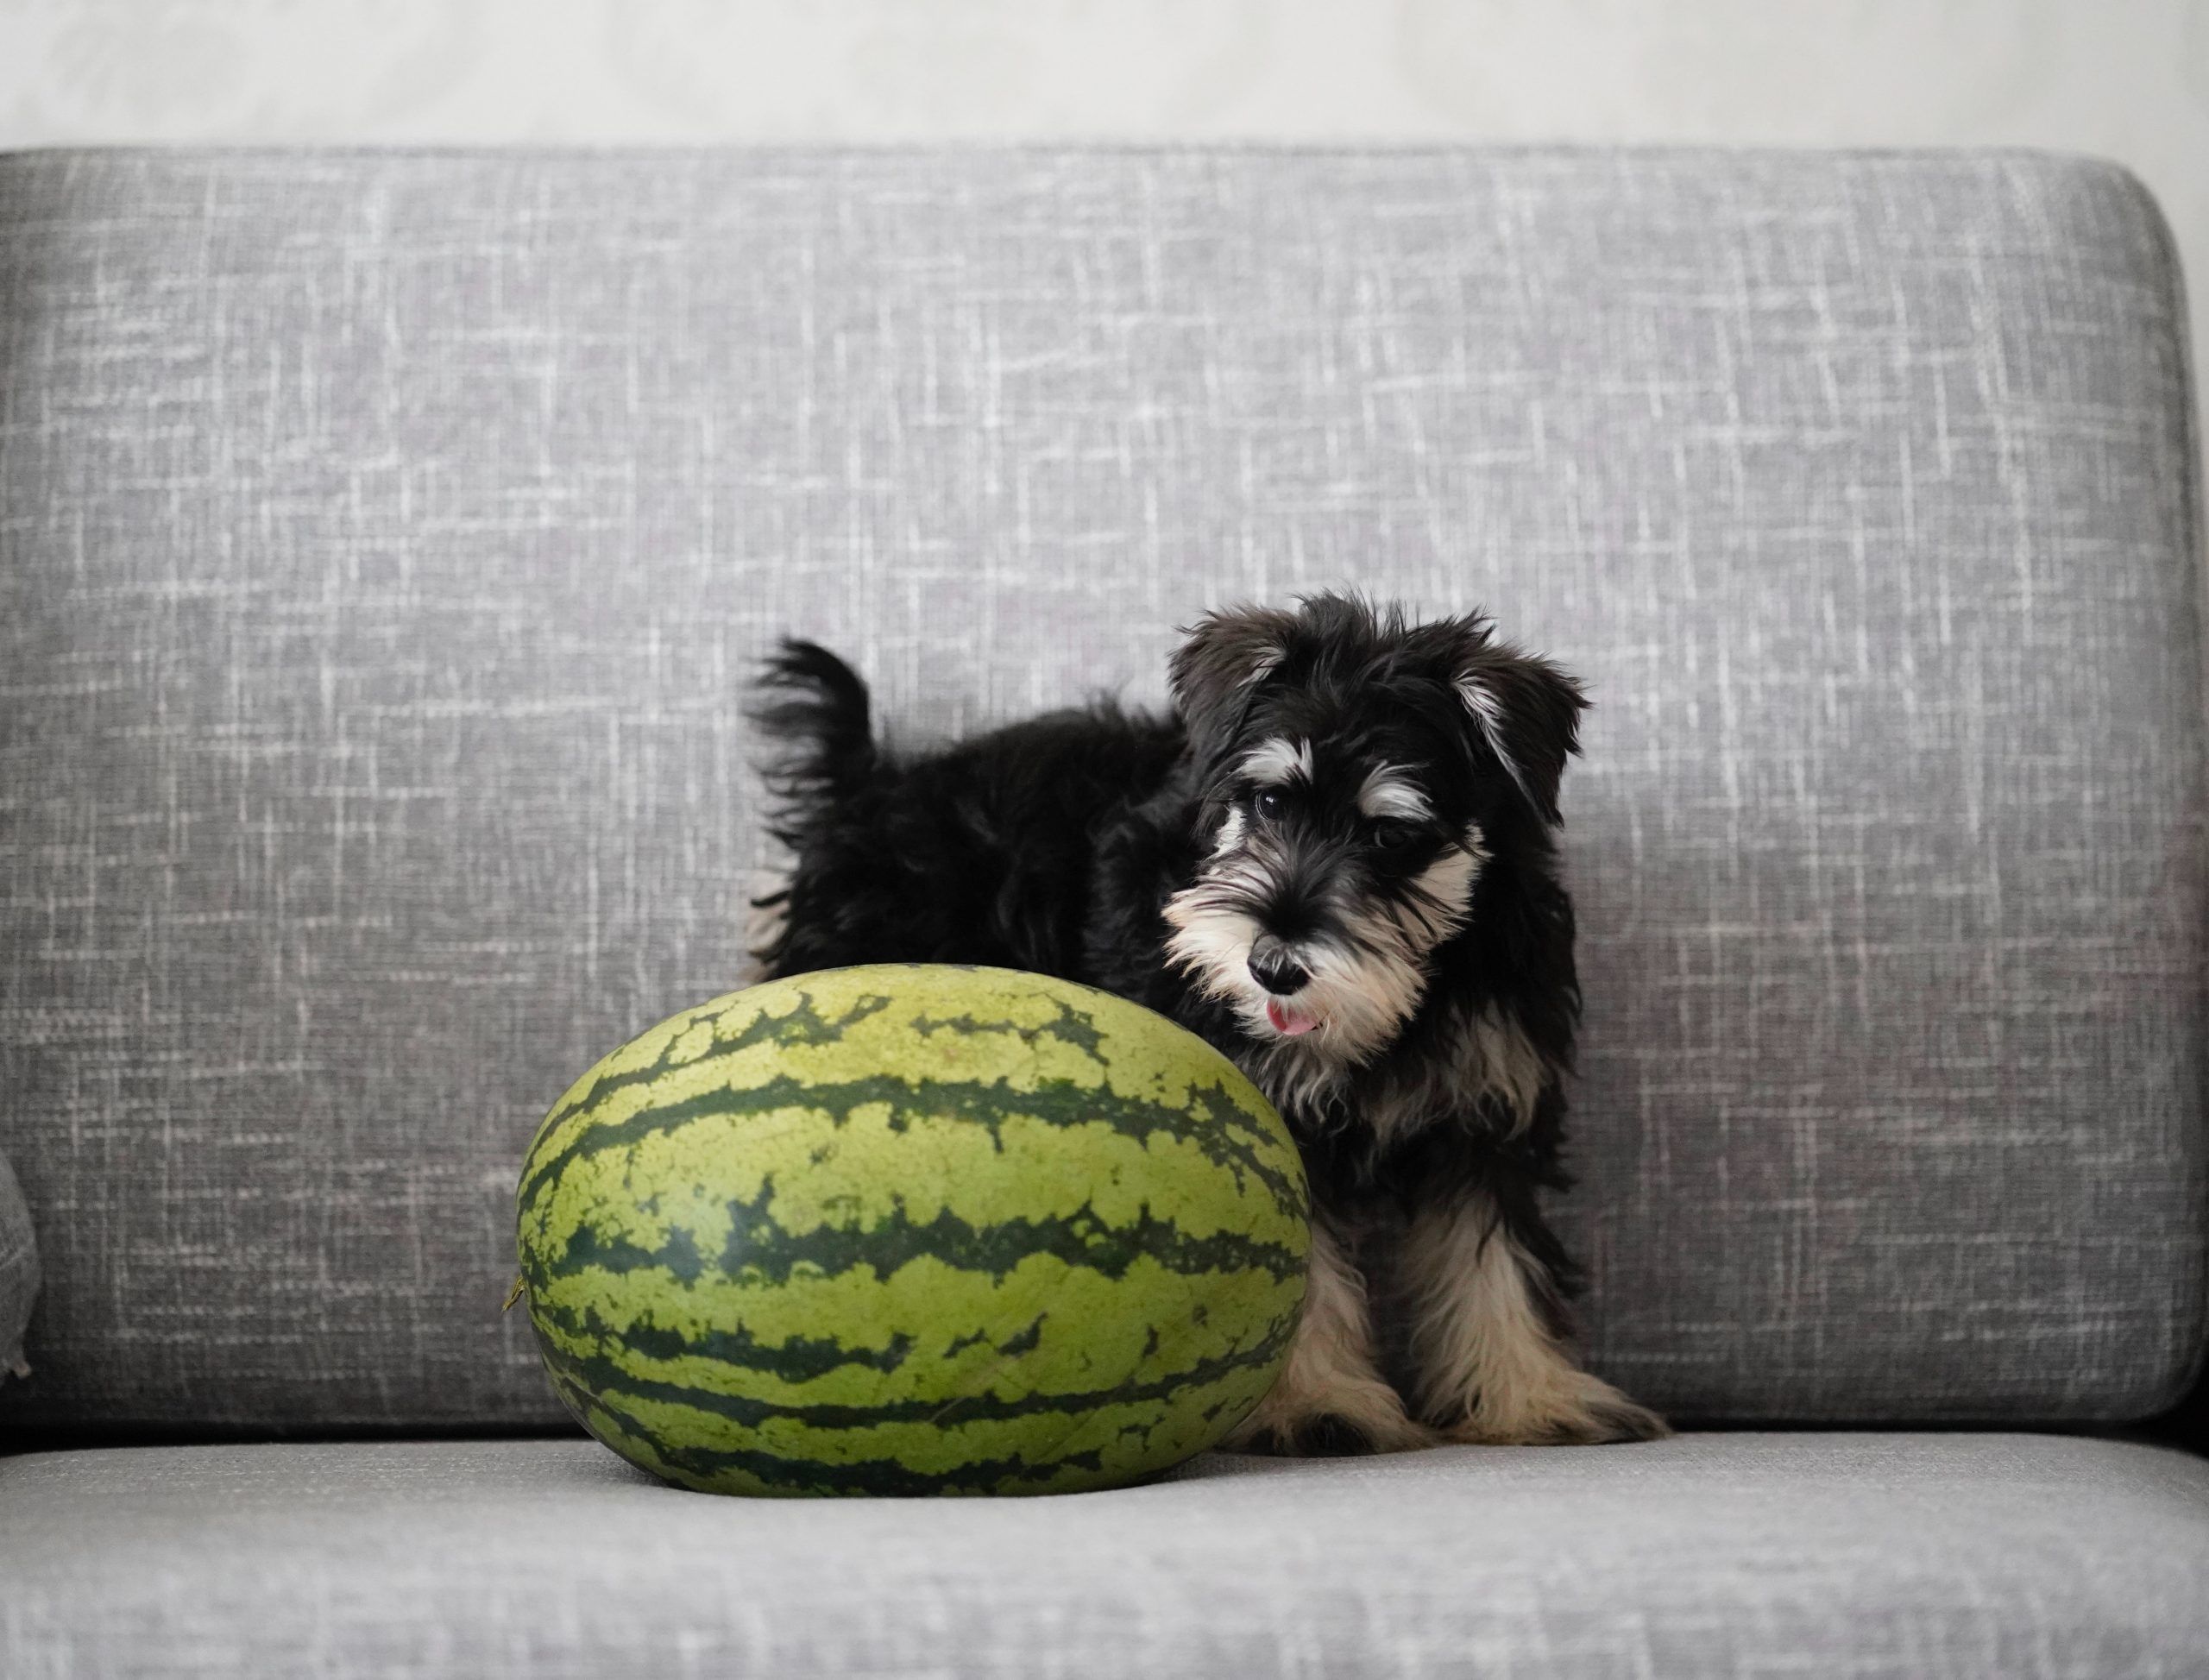 Dog on sofa with watermelon